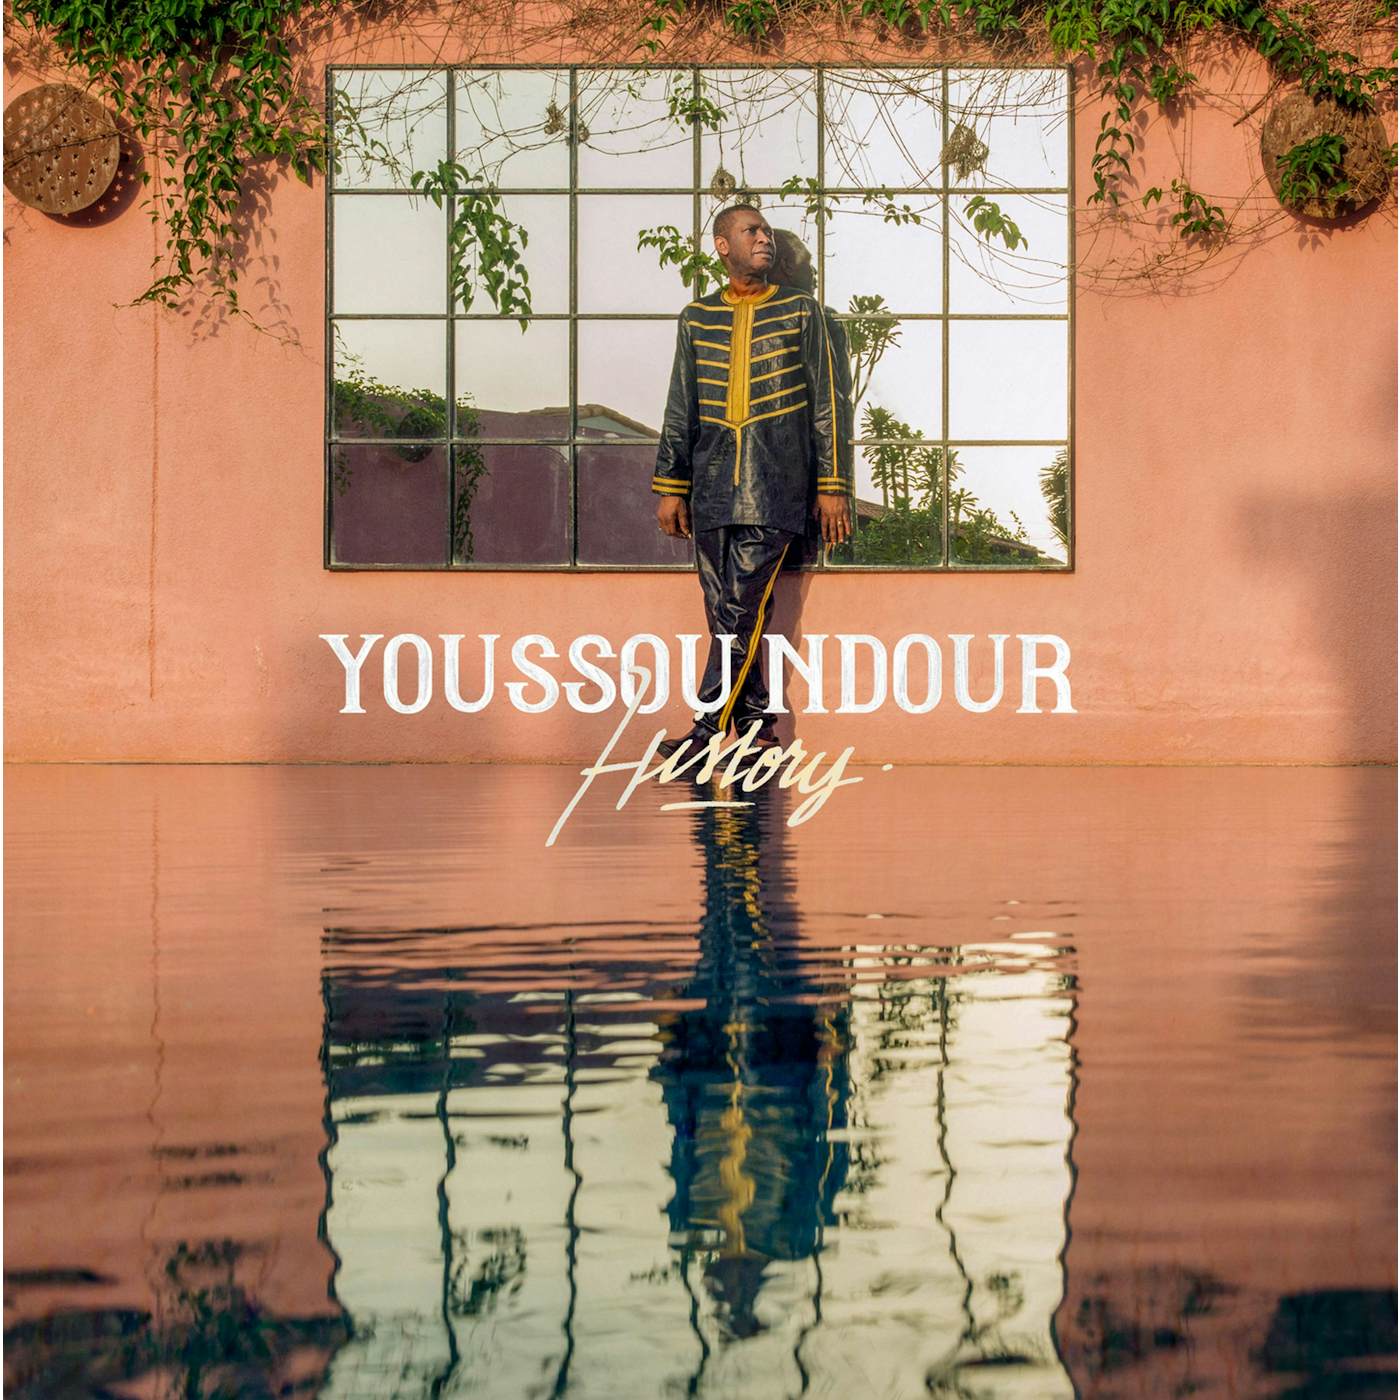 Youssou N'Dour HISTORY CD